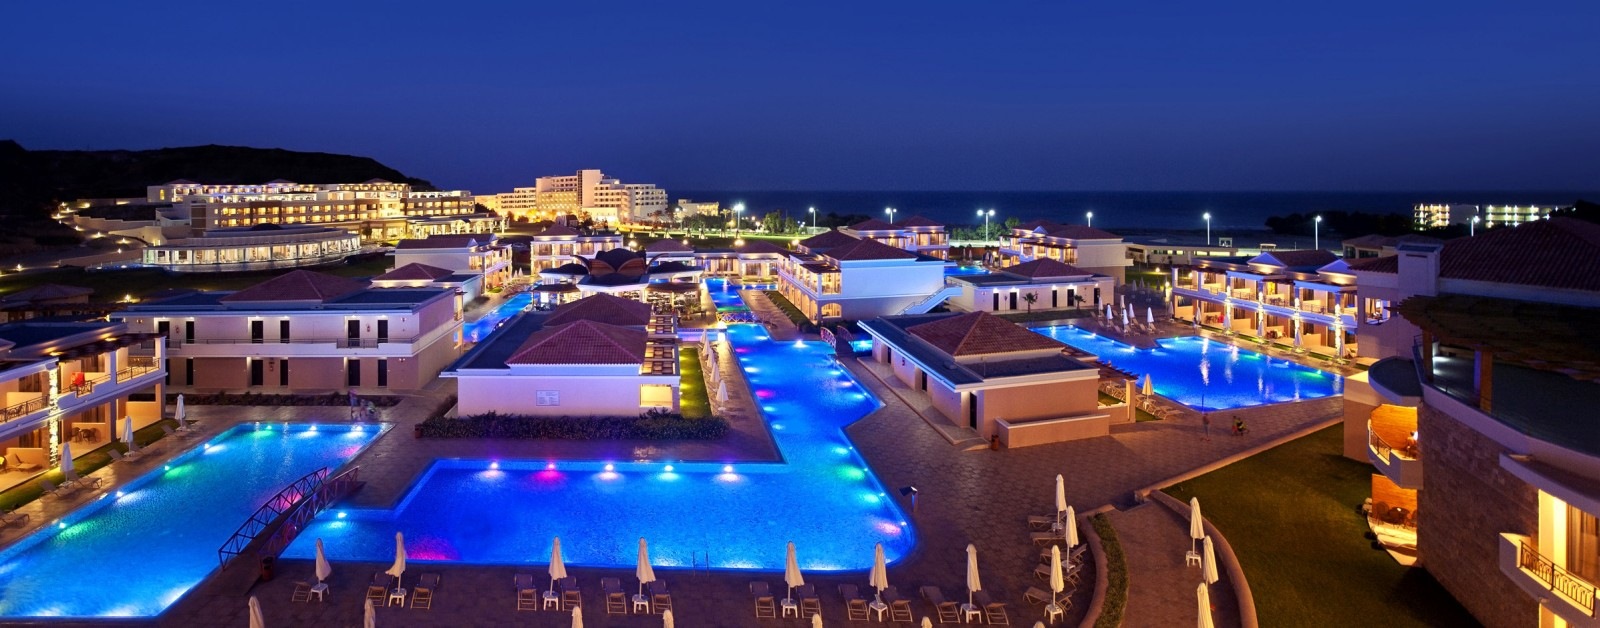 La Marquise Luxury Resort Complex - Rhodes, 5*, Greece - mobile site